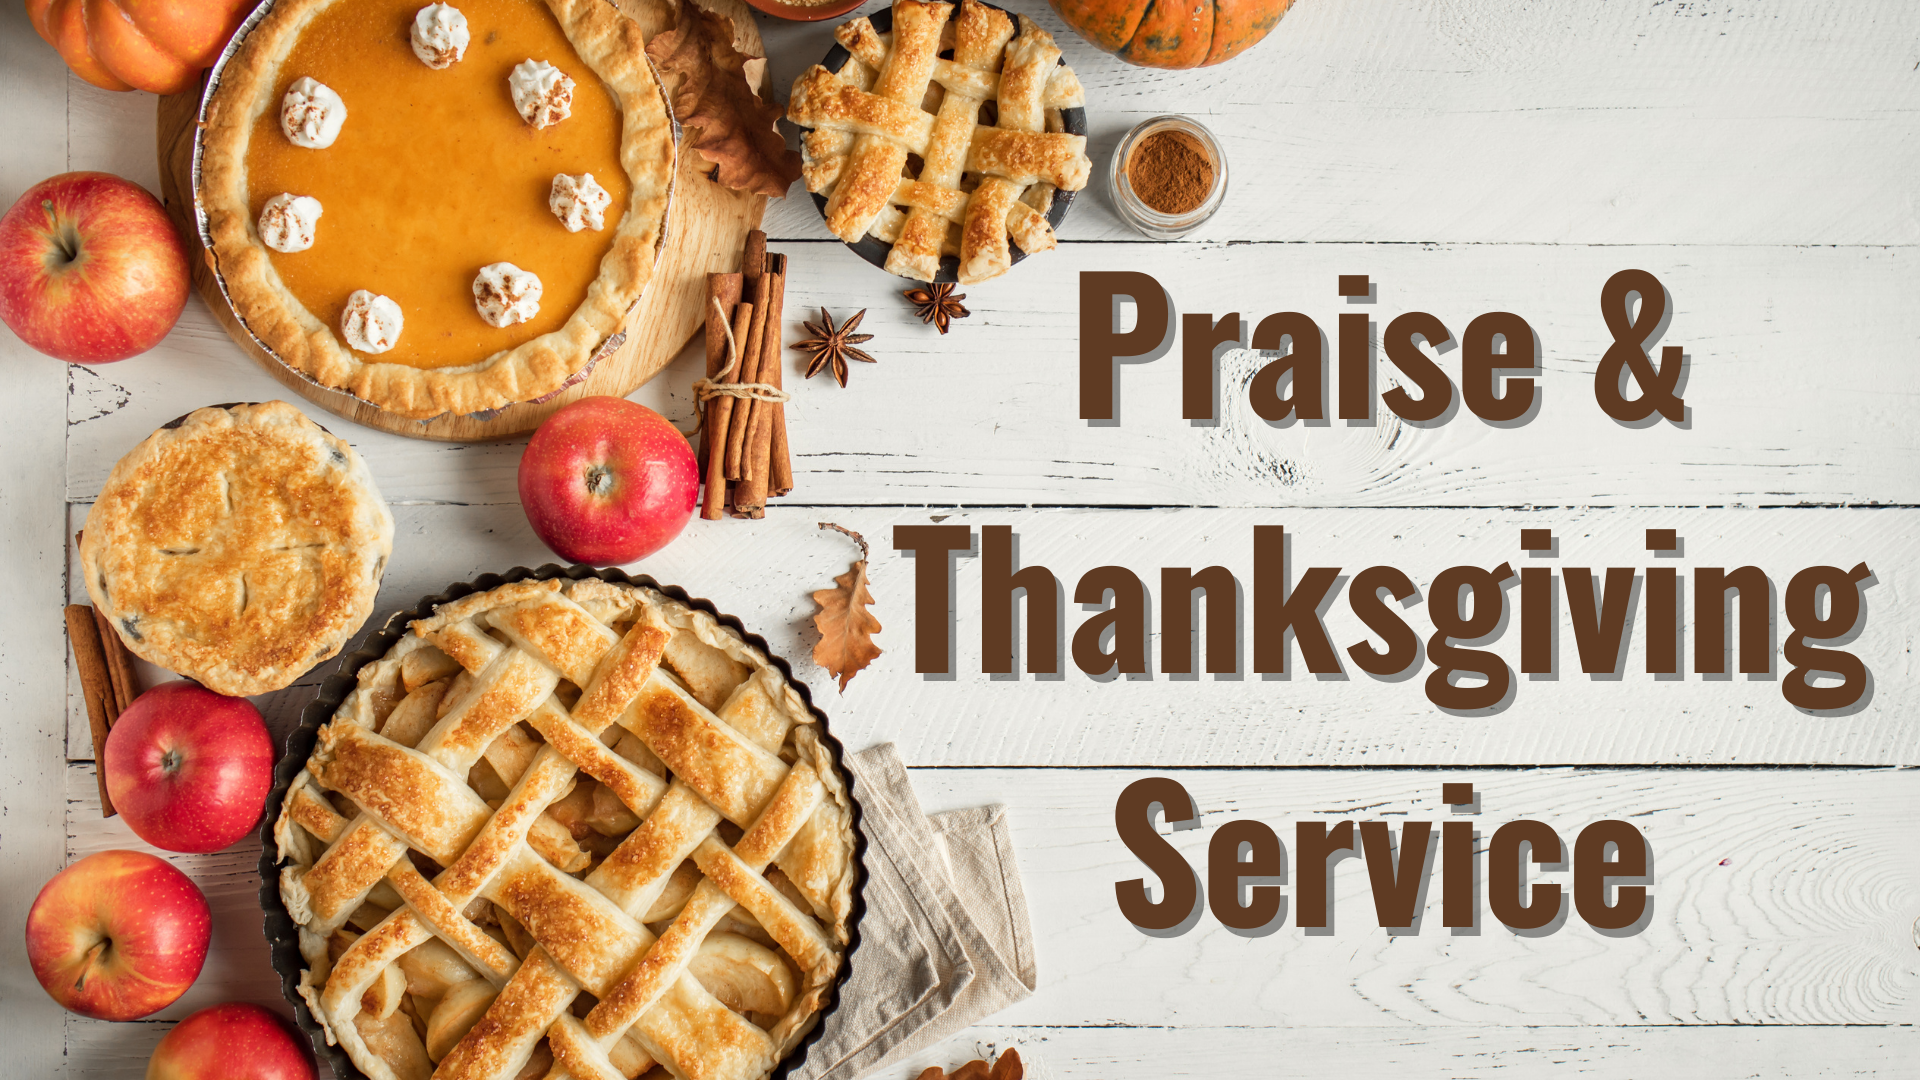 Praise & Thanksgiving Service 2021 image